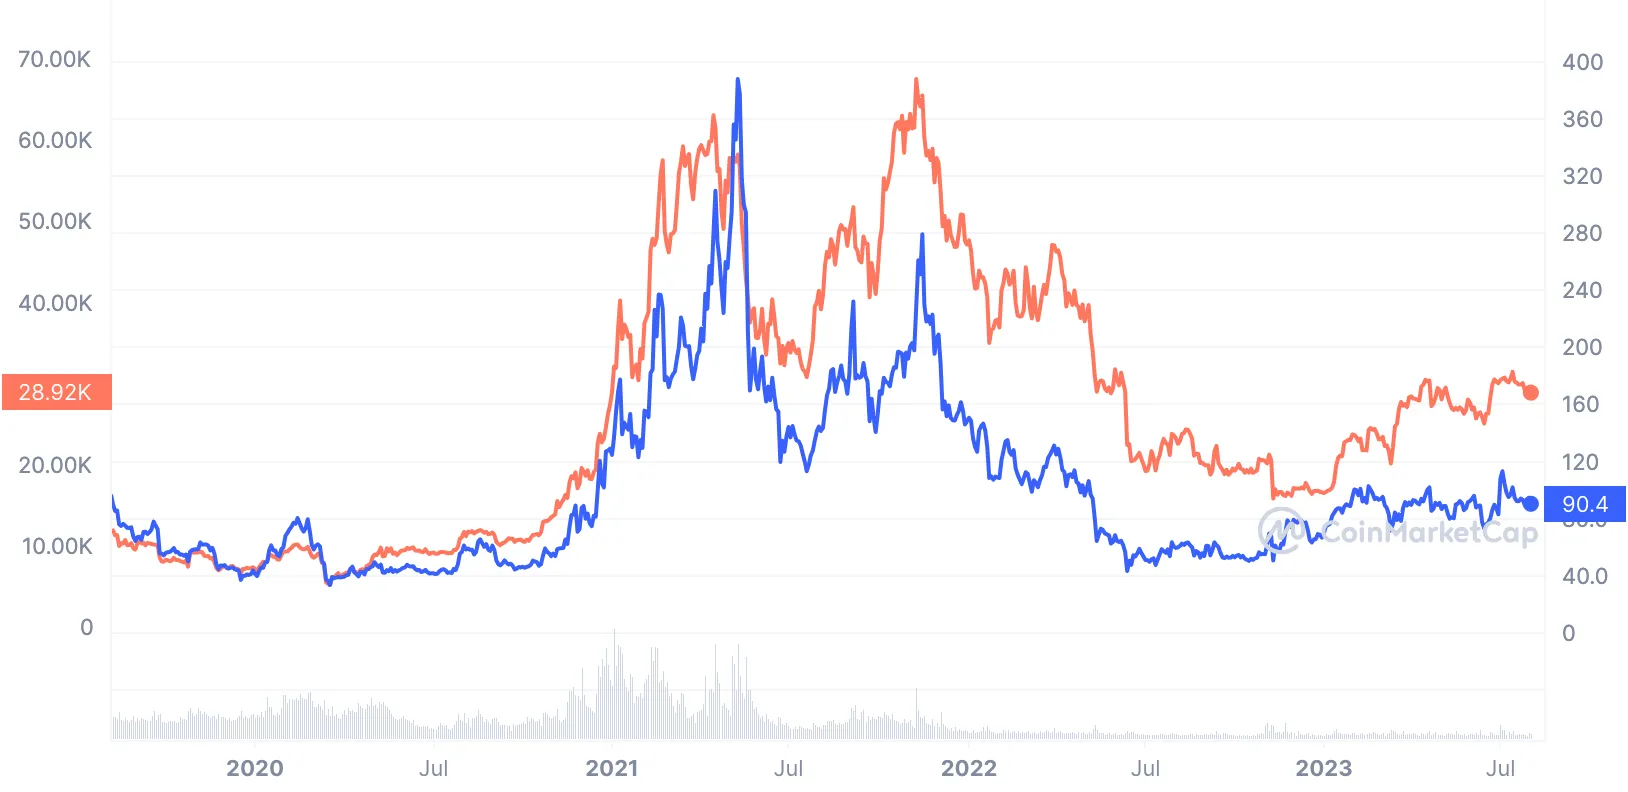 litecoin vs bitcoin price chart 2019-2023